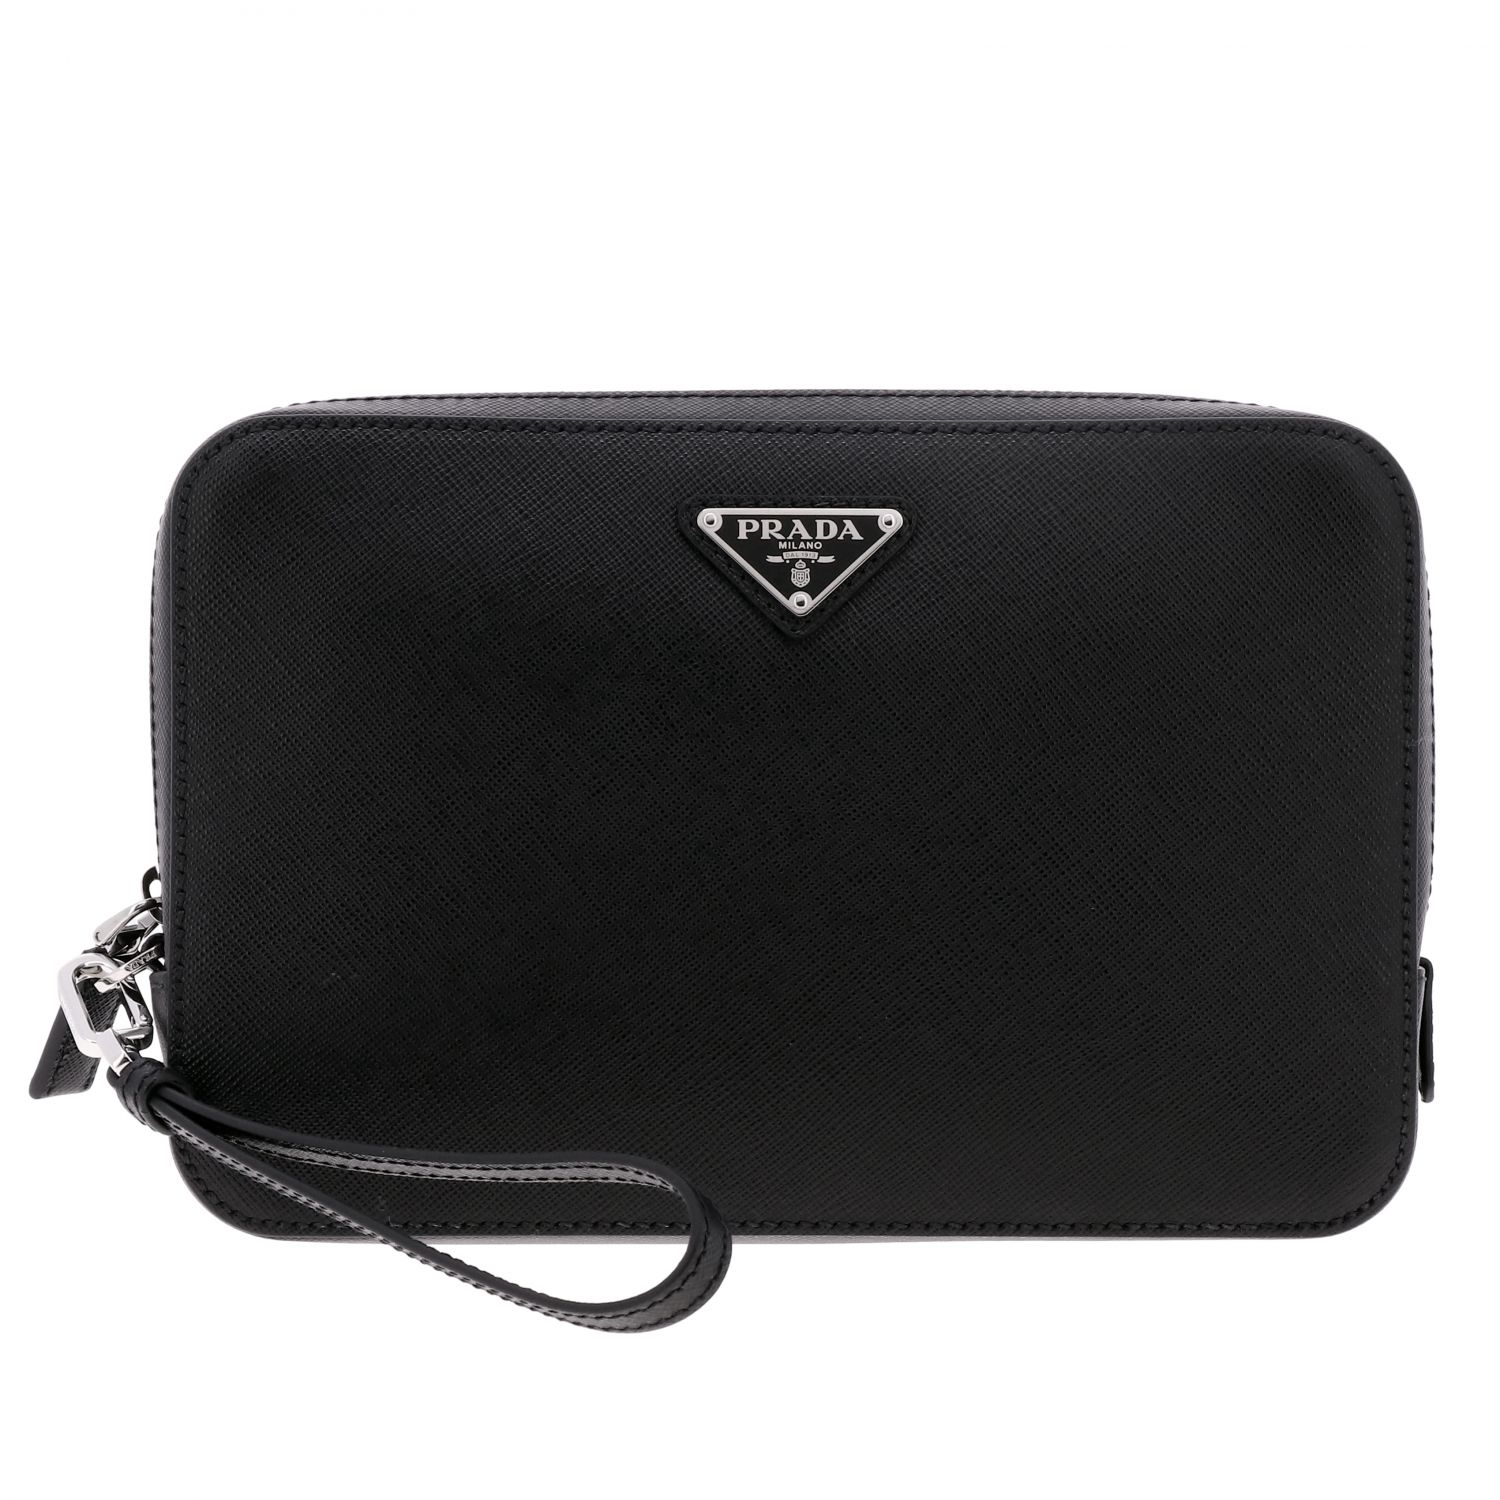 PRADA: saffiano leather clutch with triangular logo - Black | Prada bags  2VF017 OOO 9Z2 online on 